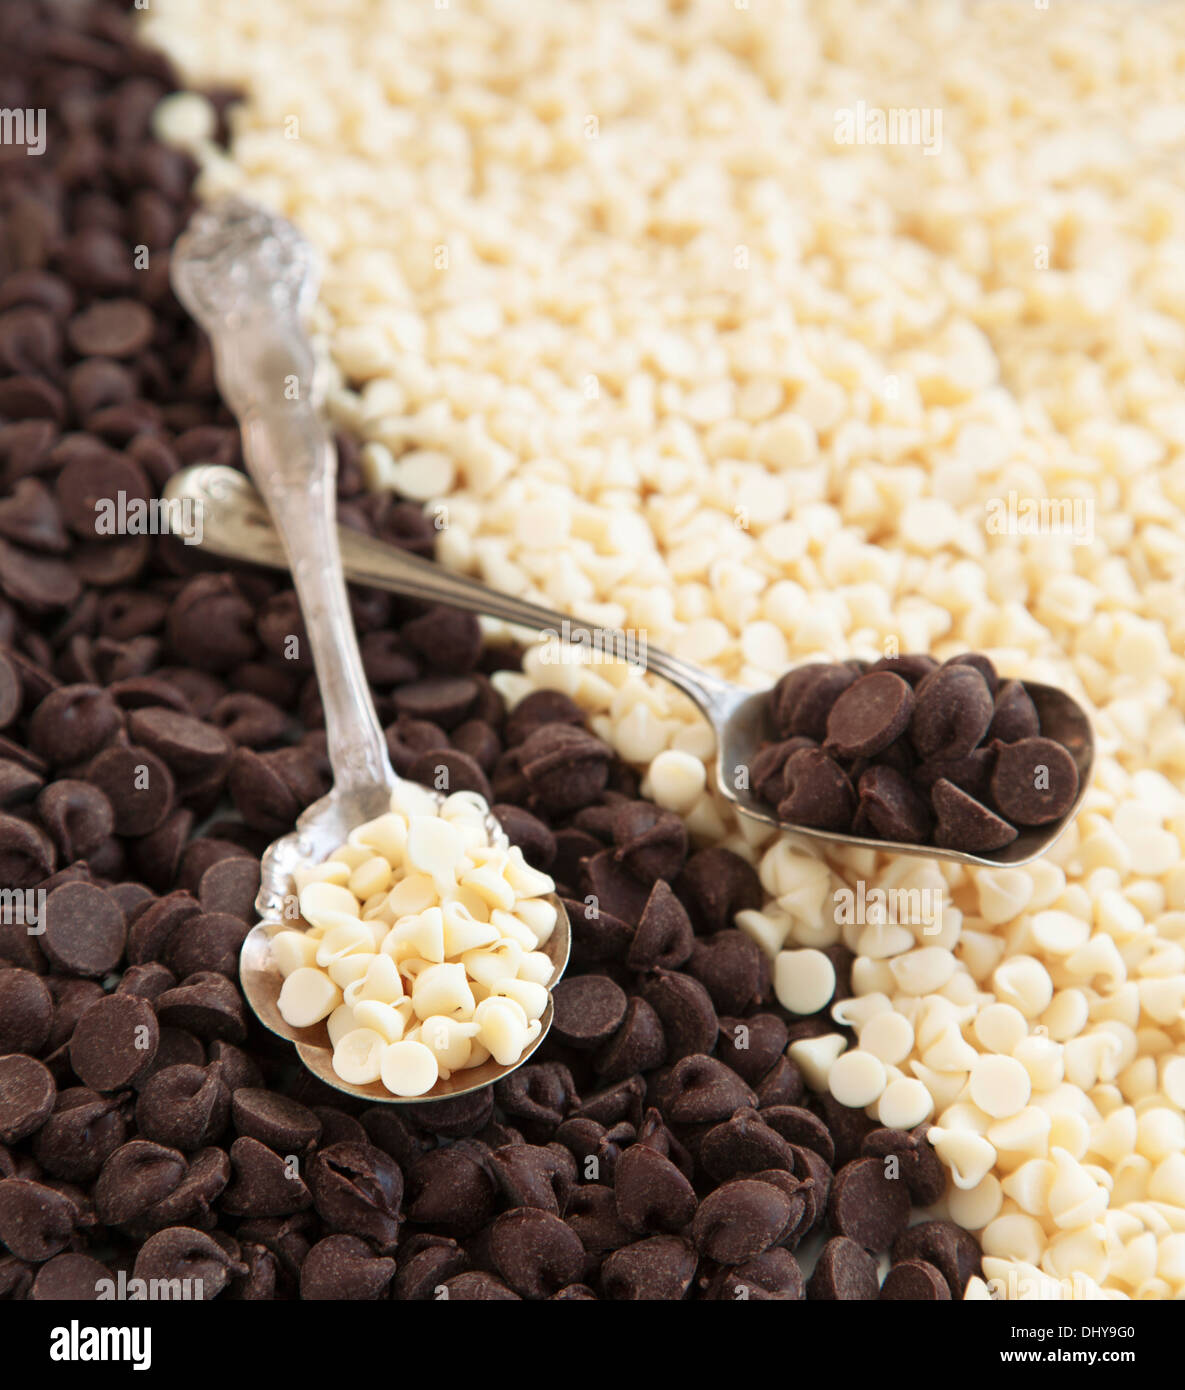 White and dark chocolate chips background. Baking ingredient Stock Photo